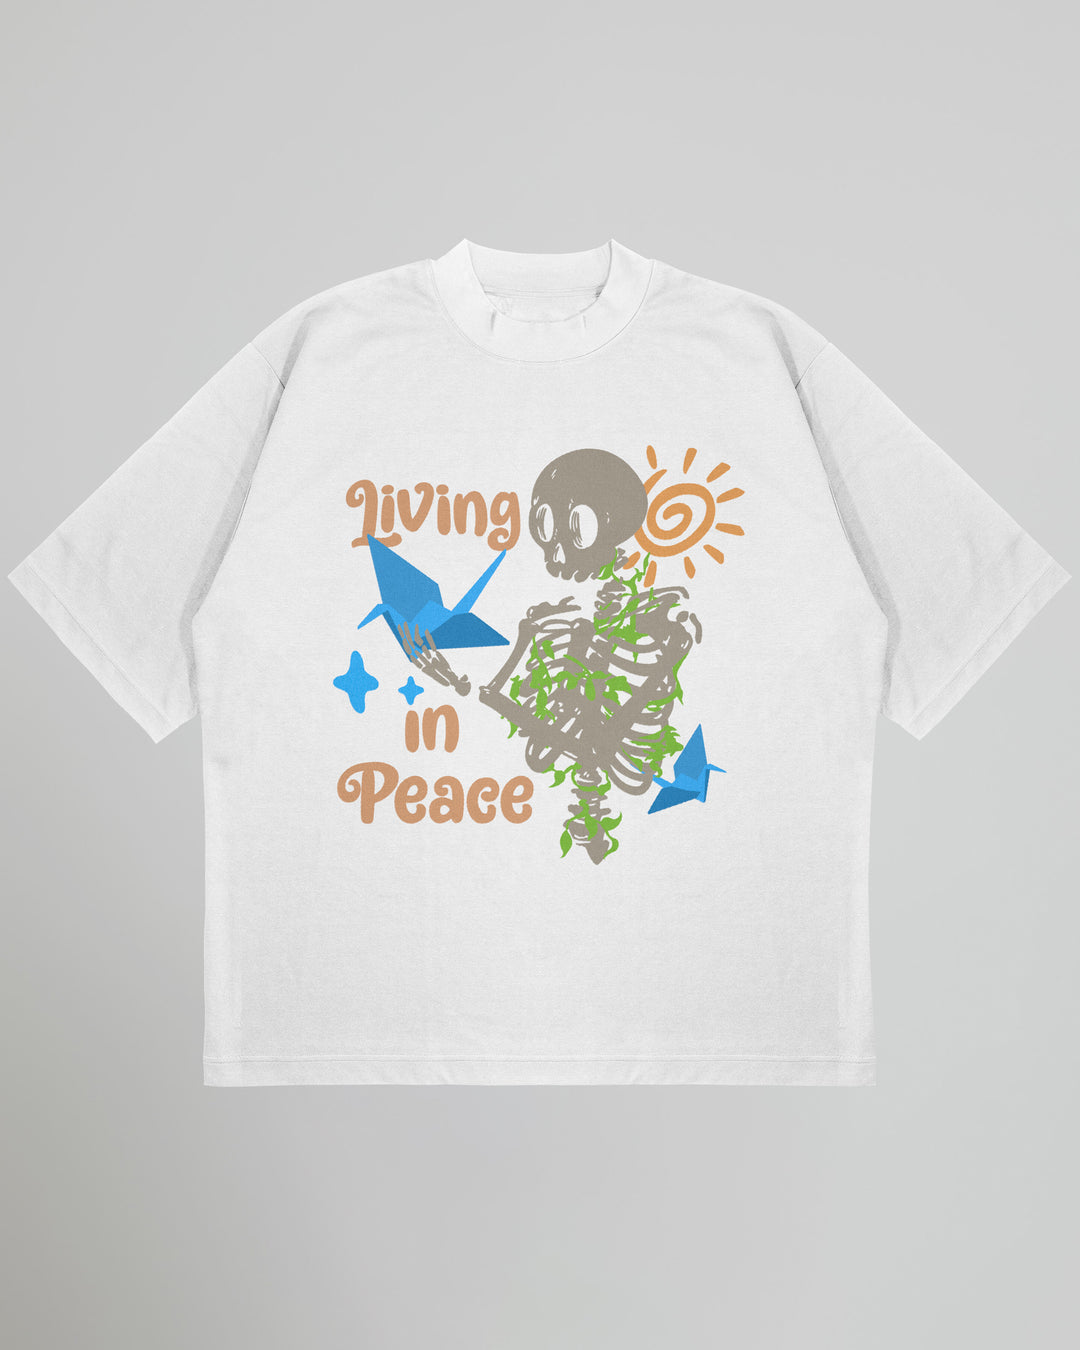 Copy of Copy of Copy of kami-tachi ni hirowareta otoko 2nd season T-Shirt  tops T-shirt for a boy mens graphic t-shirts anime